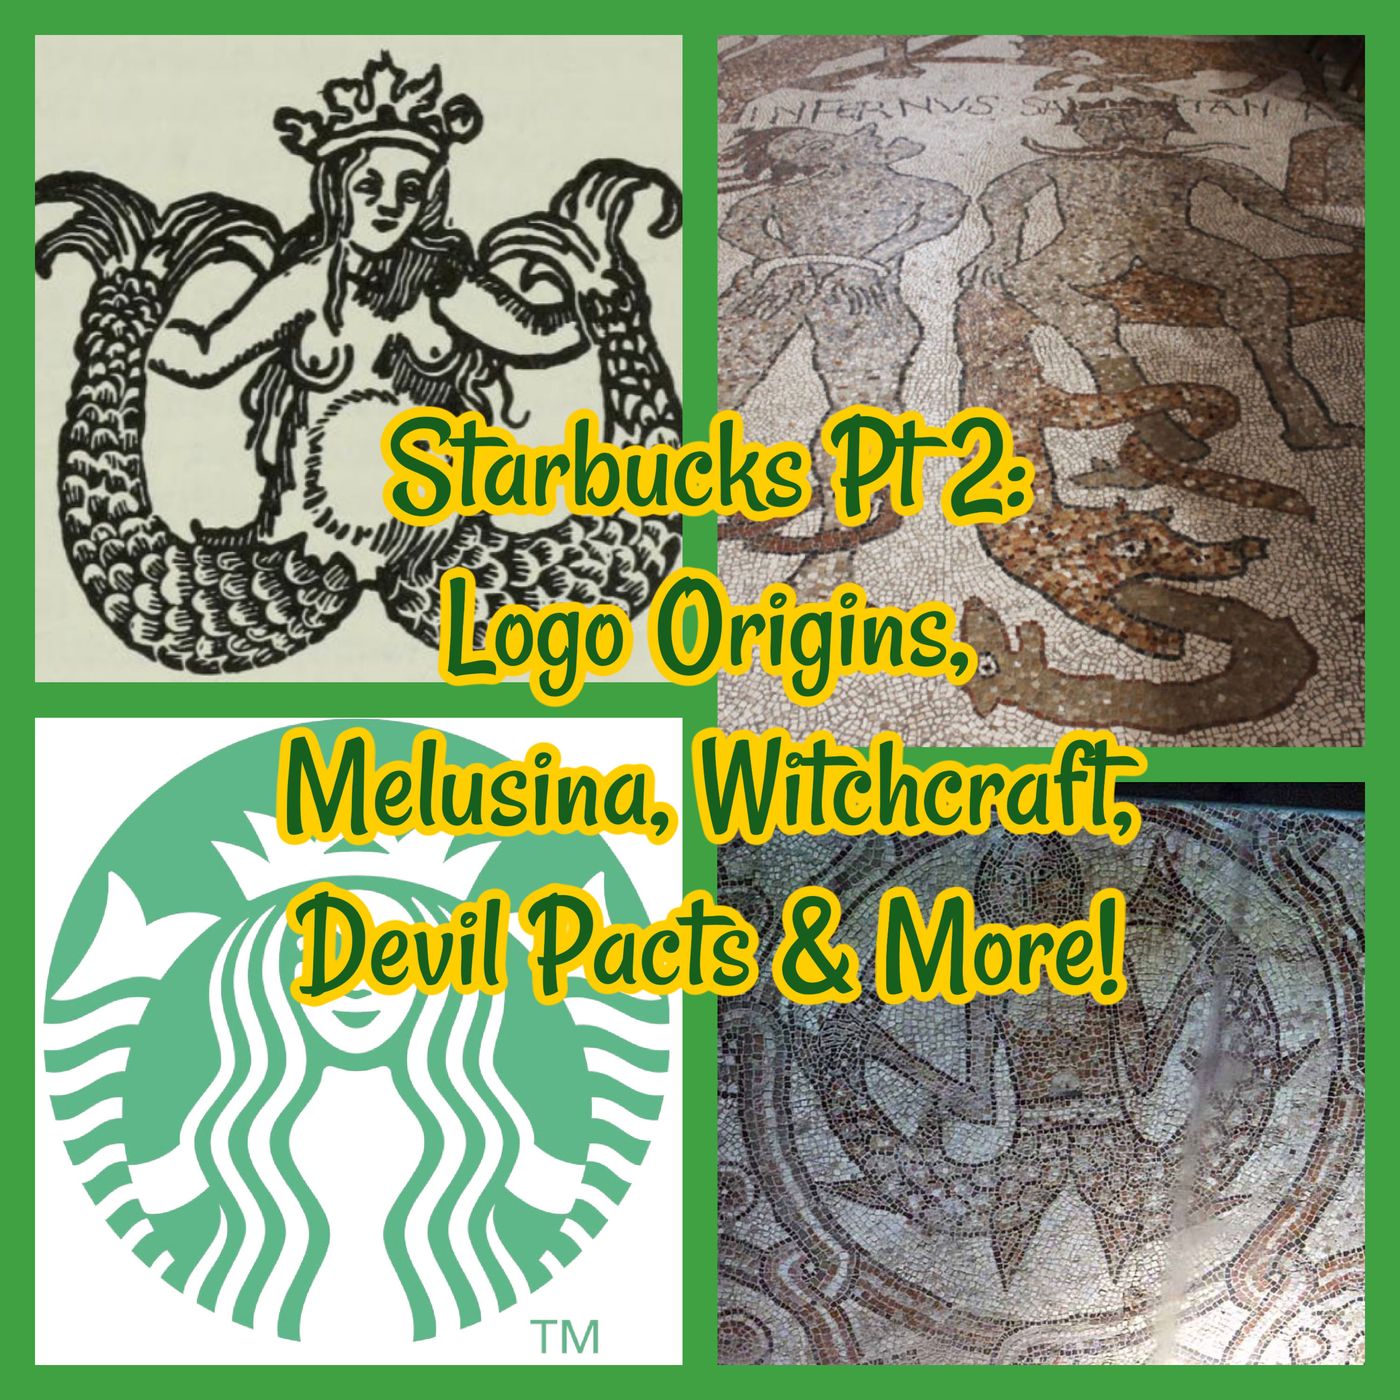 Starbucks Pt 2: Logo Origins, Melusina, Witchcraft, Devil Pacts & More!